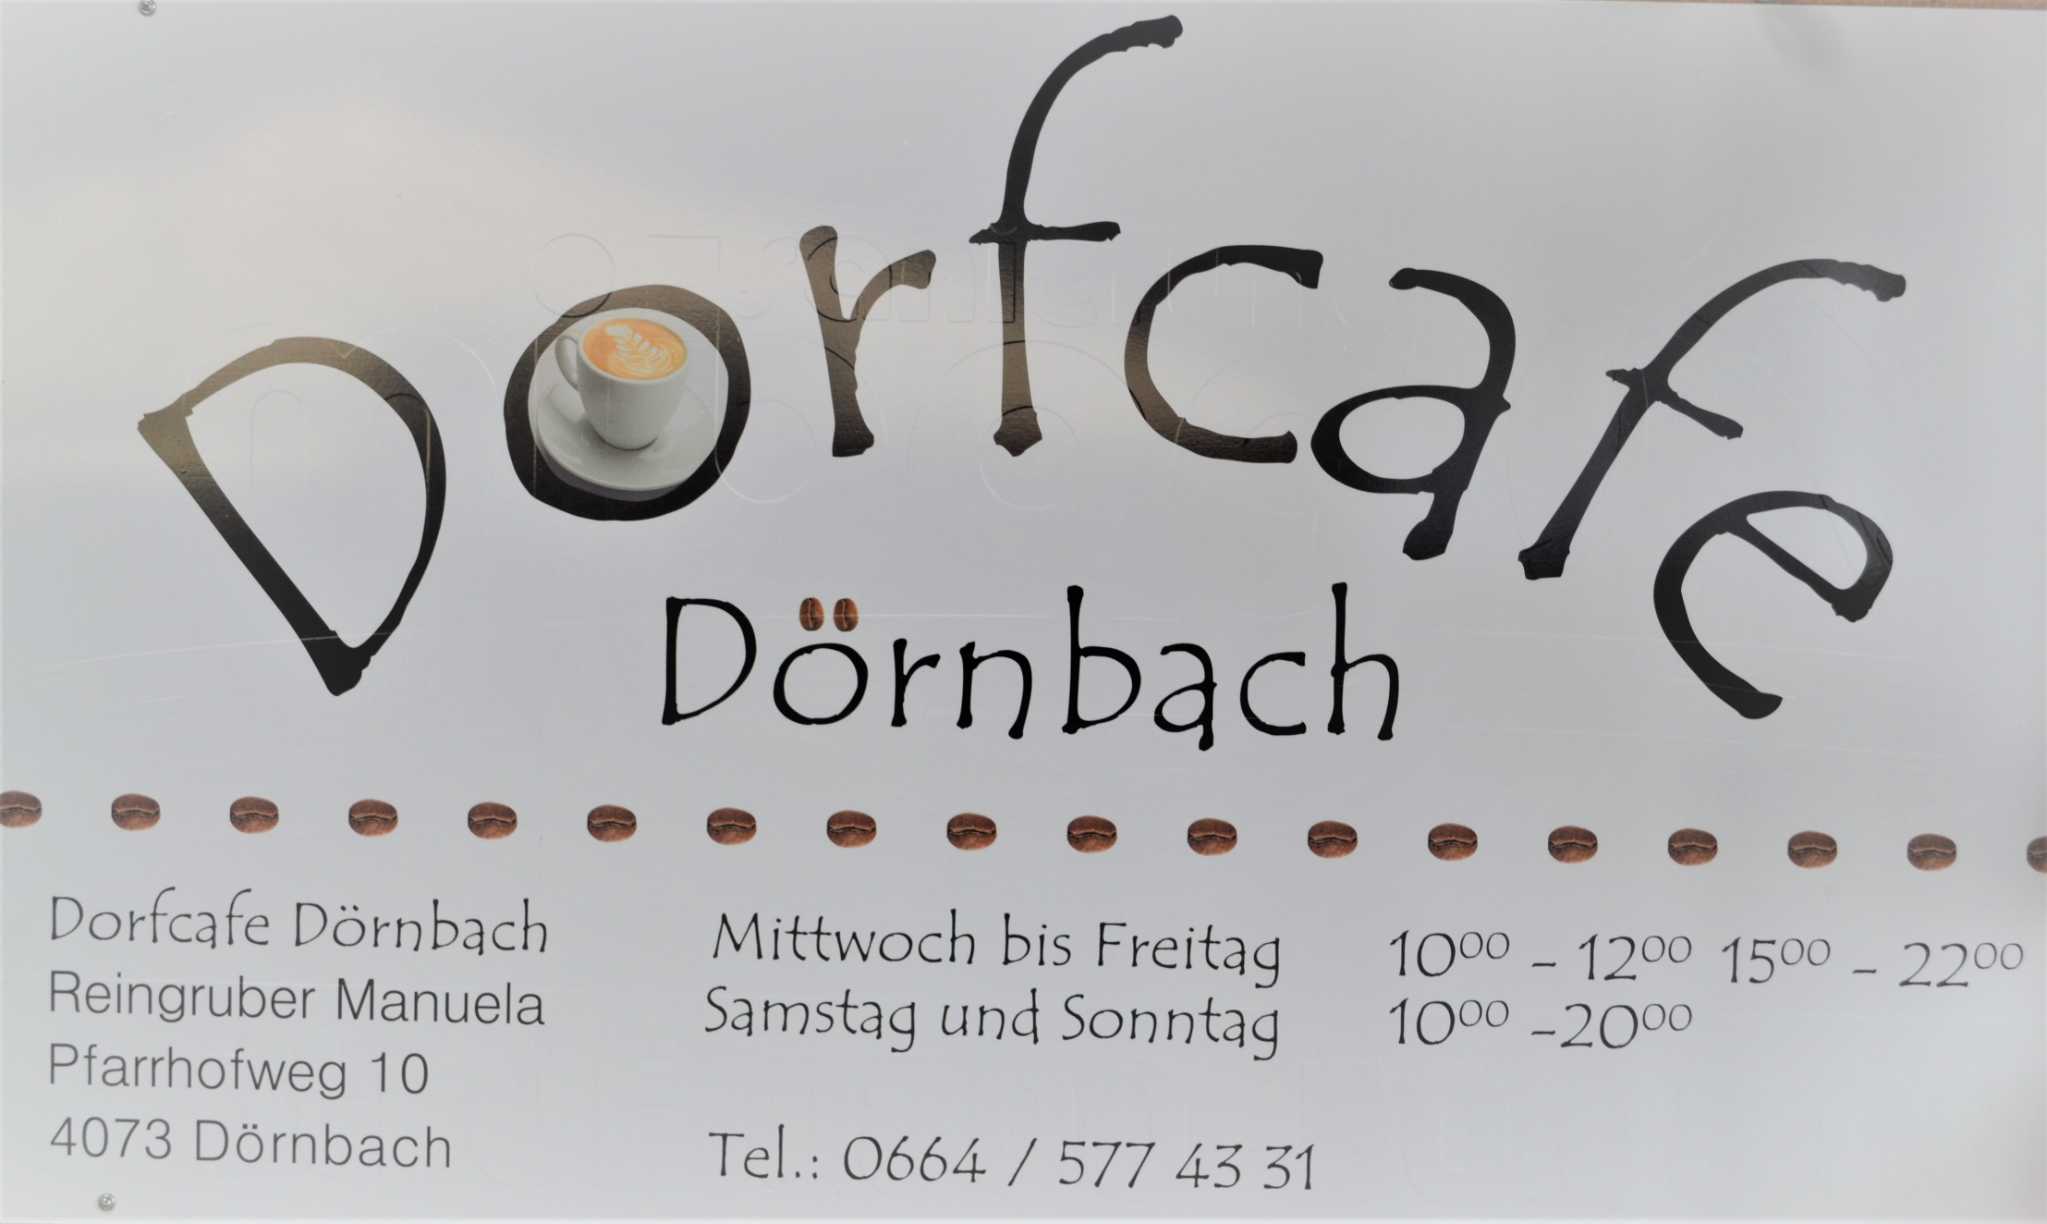 Dorfcafe Dörnbach